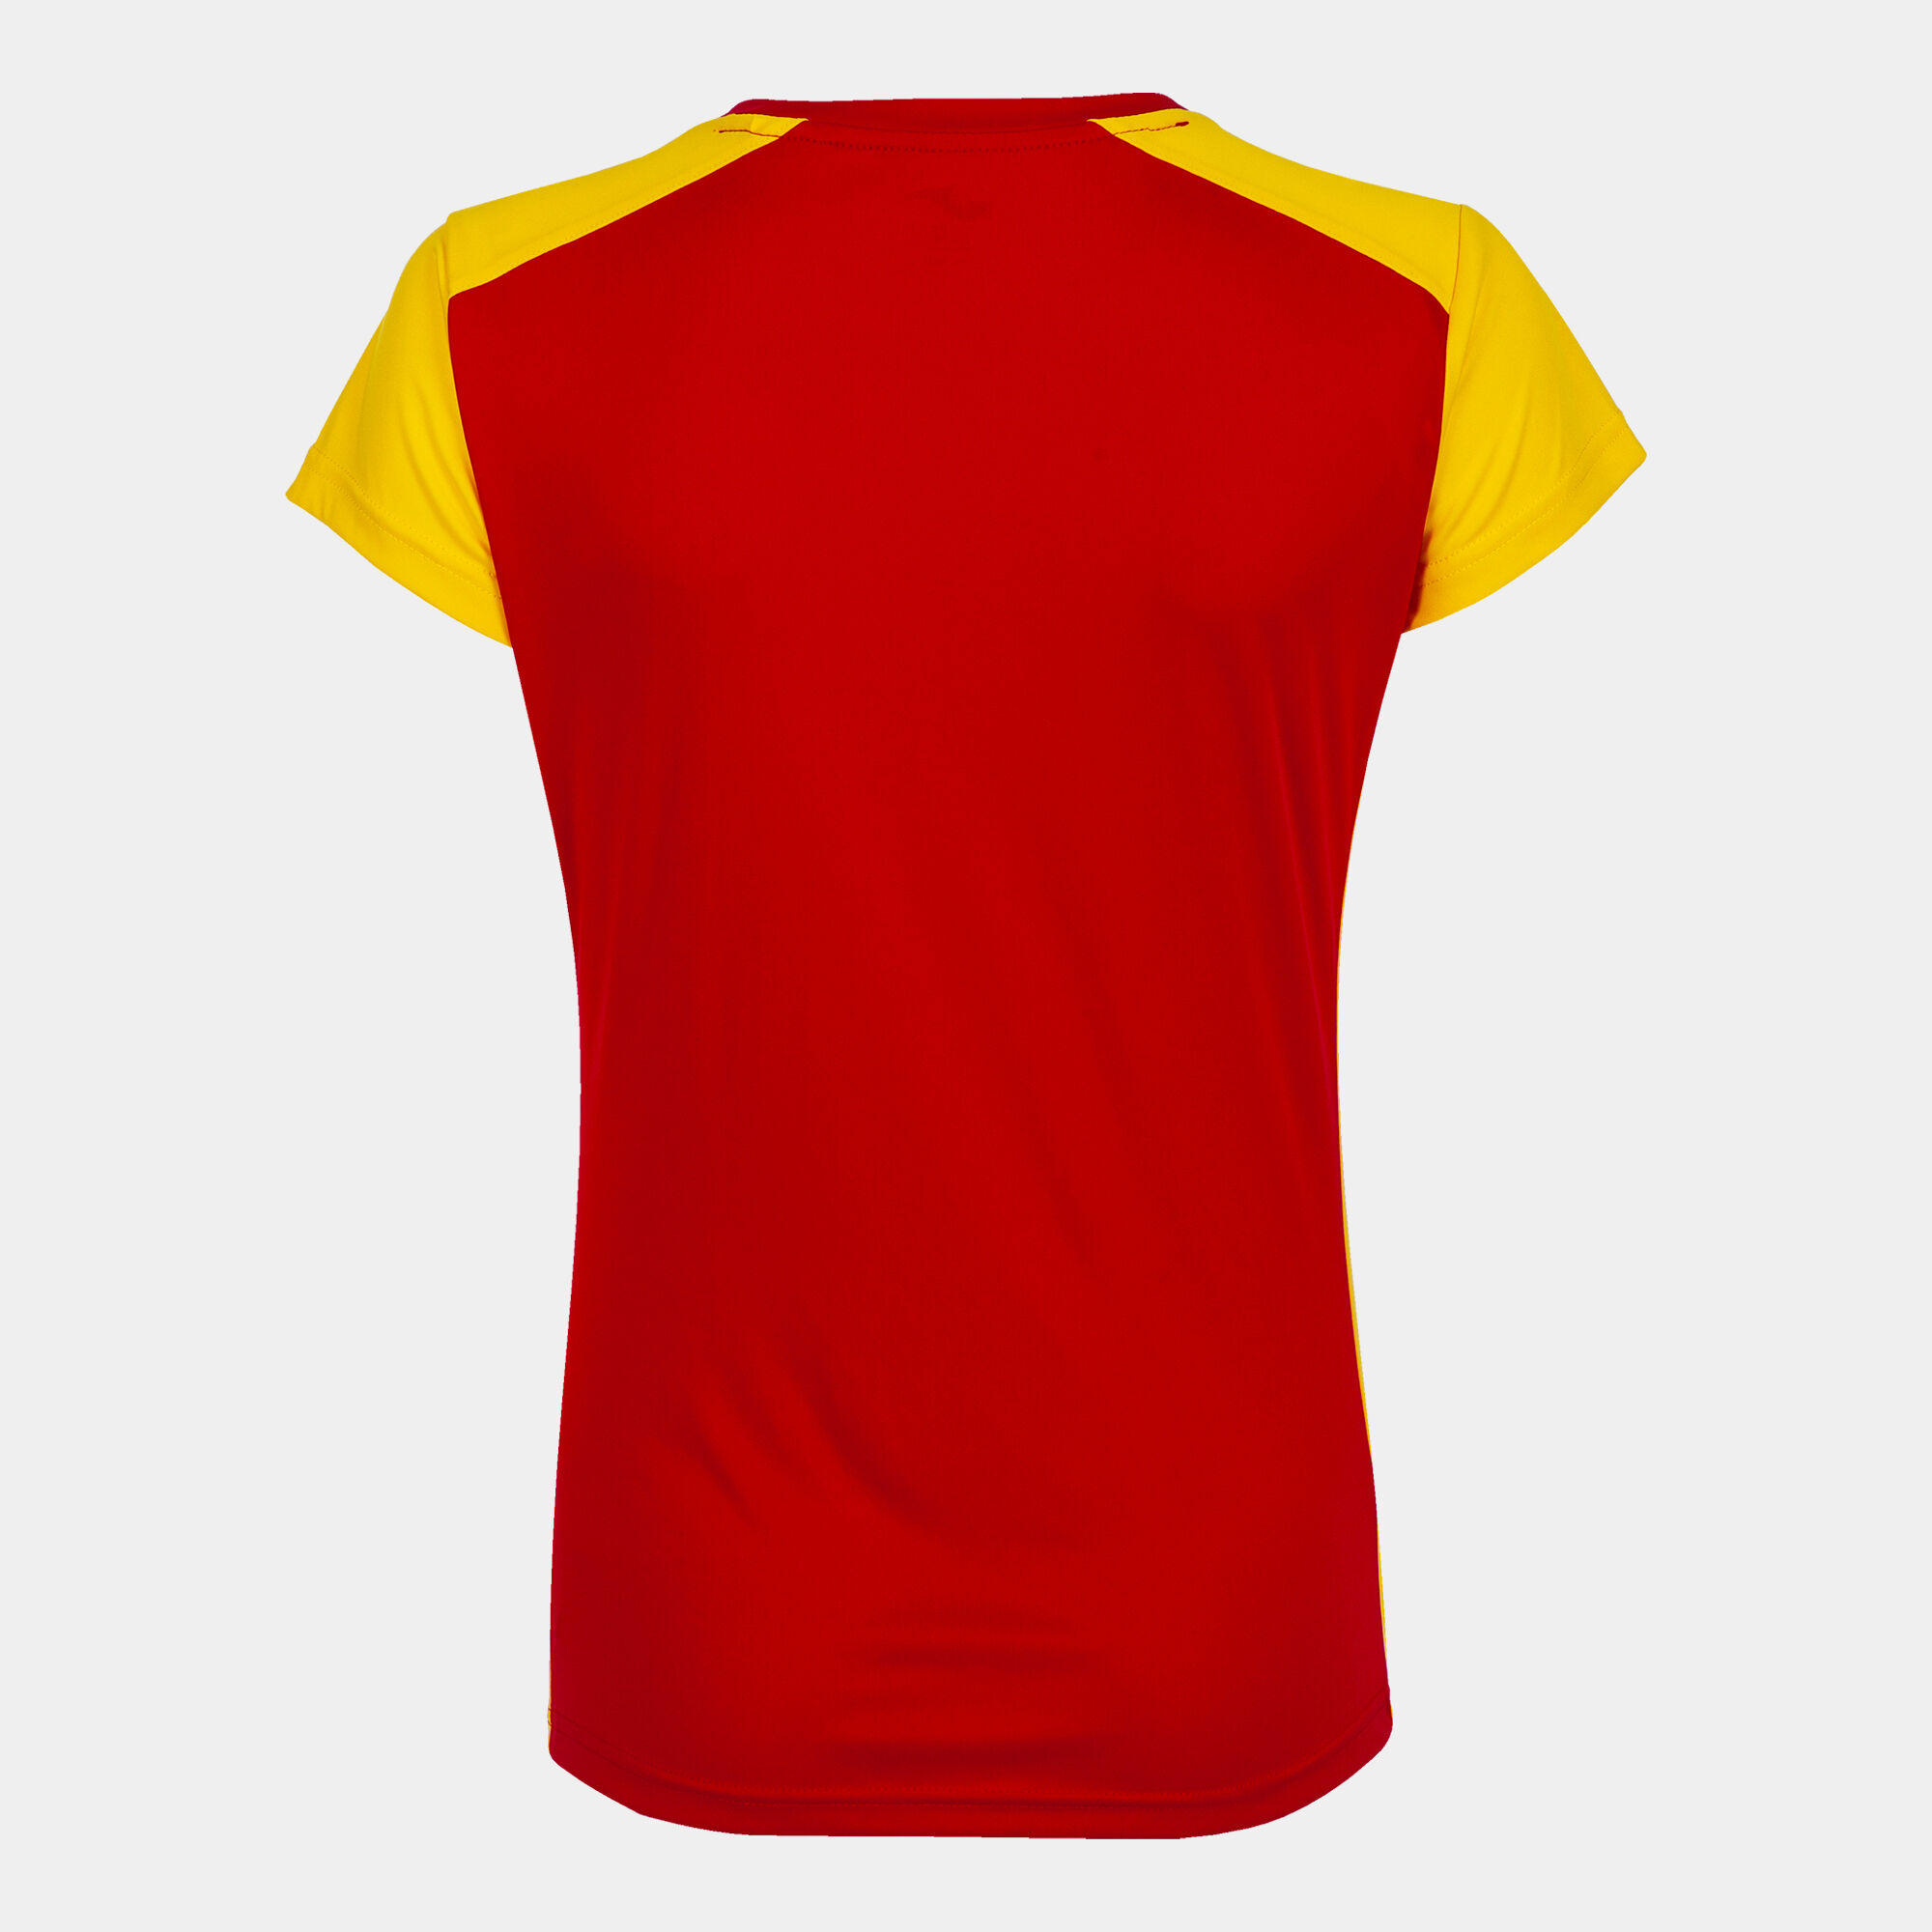 Camiseta manga corta mujer Record II rojo amarillo